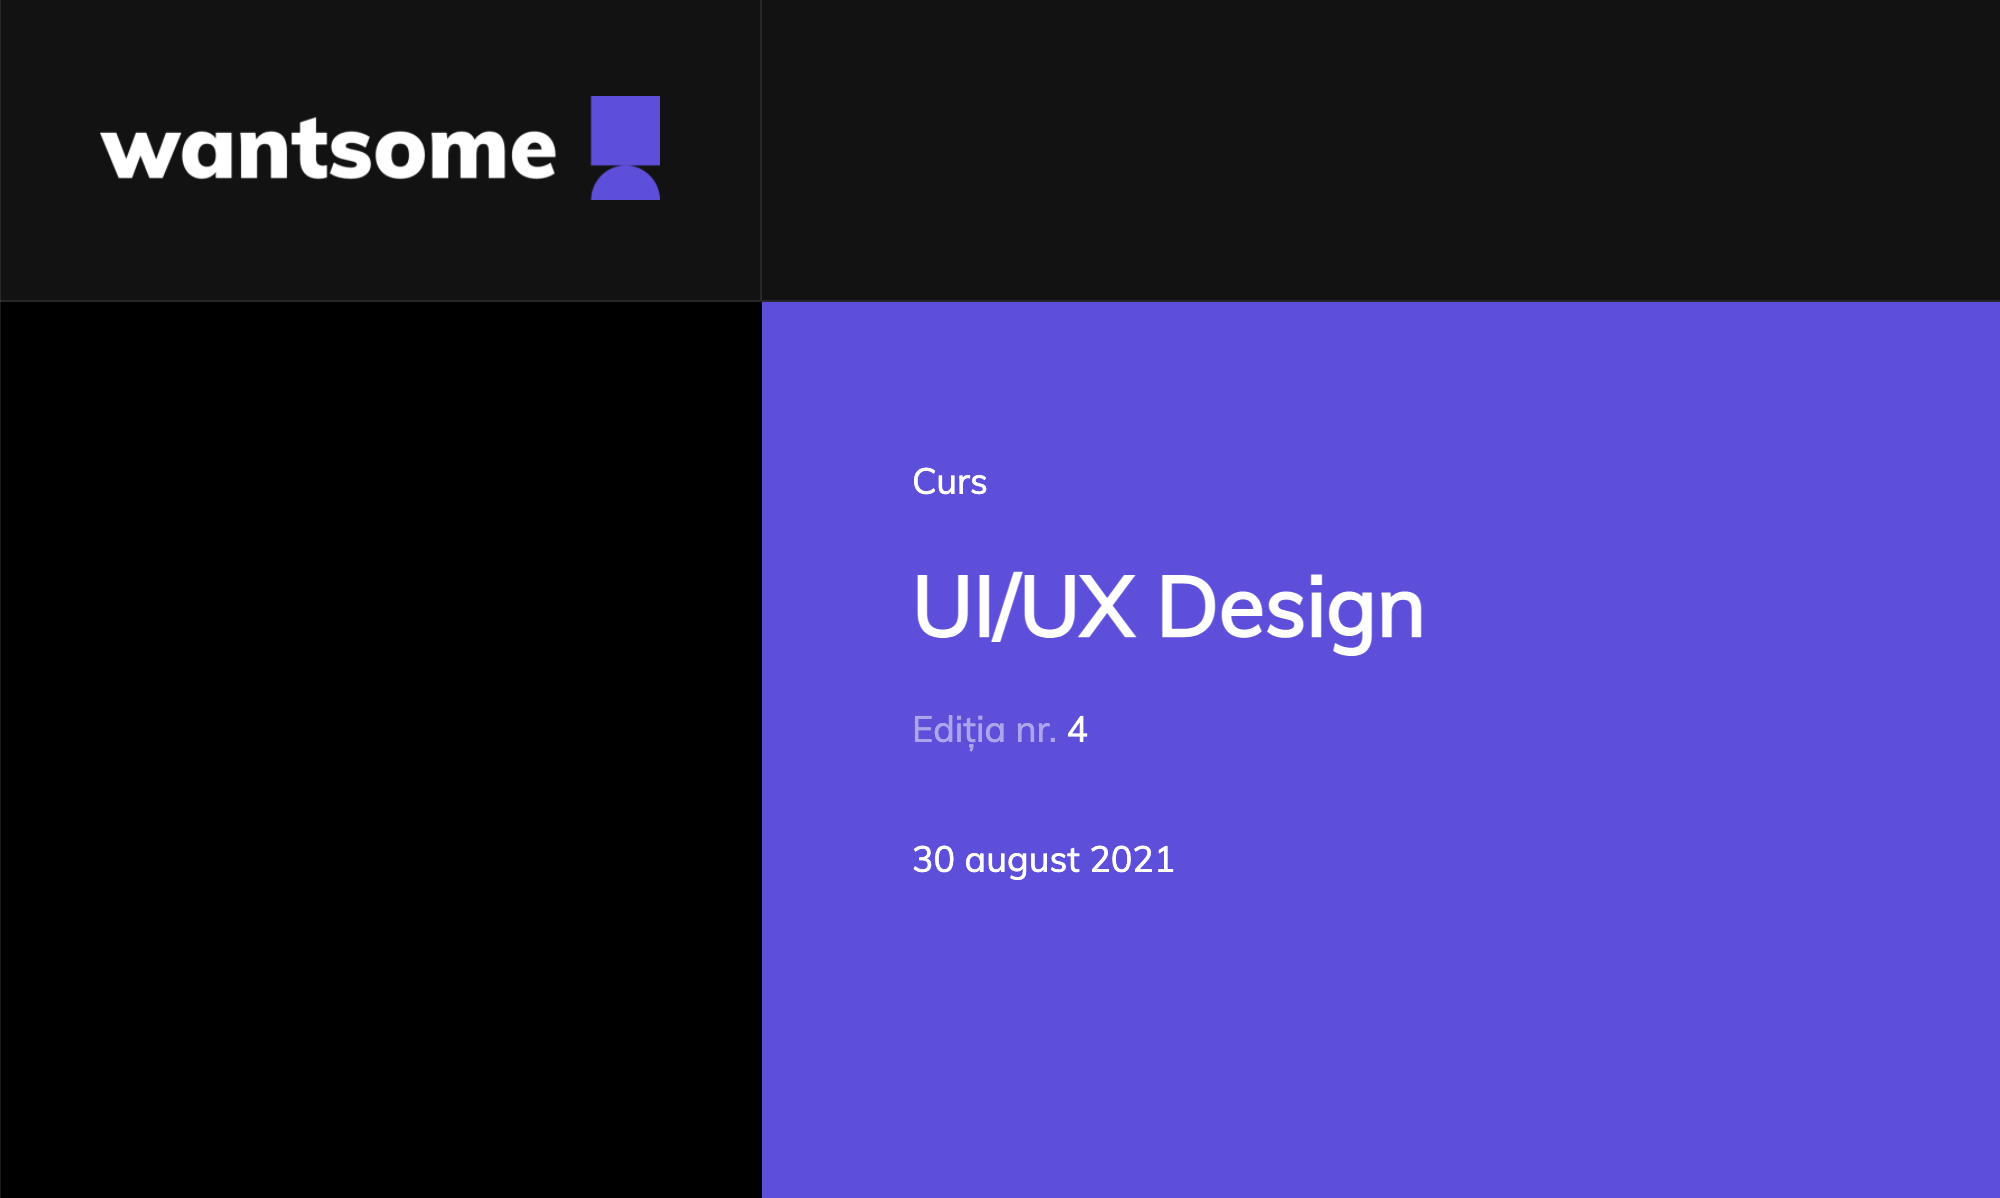 Wantsome – Curs UI/UX